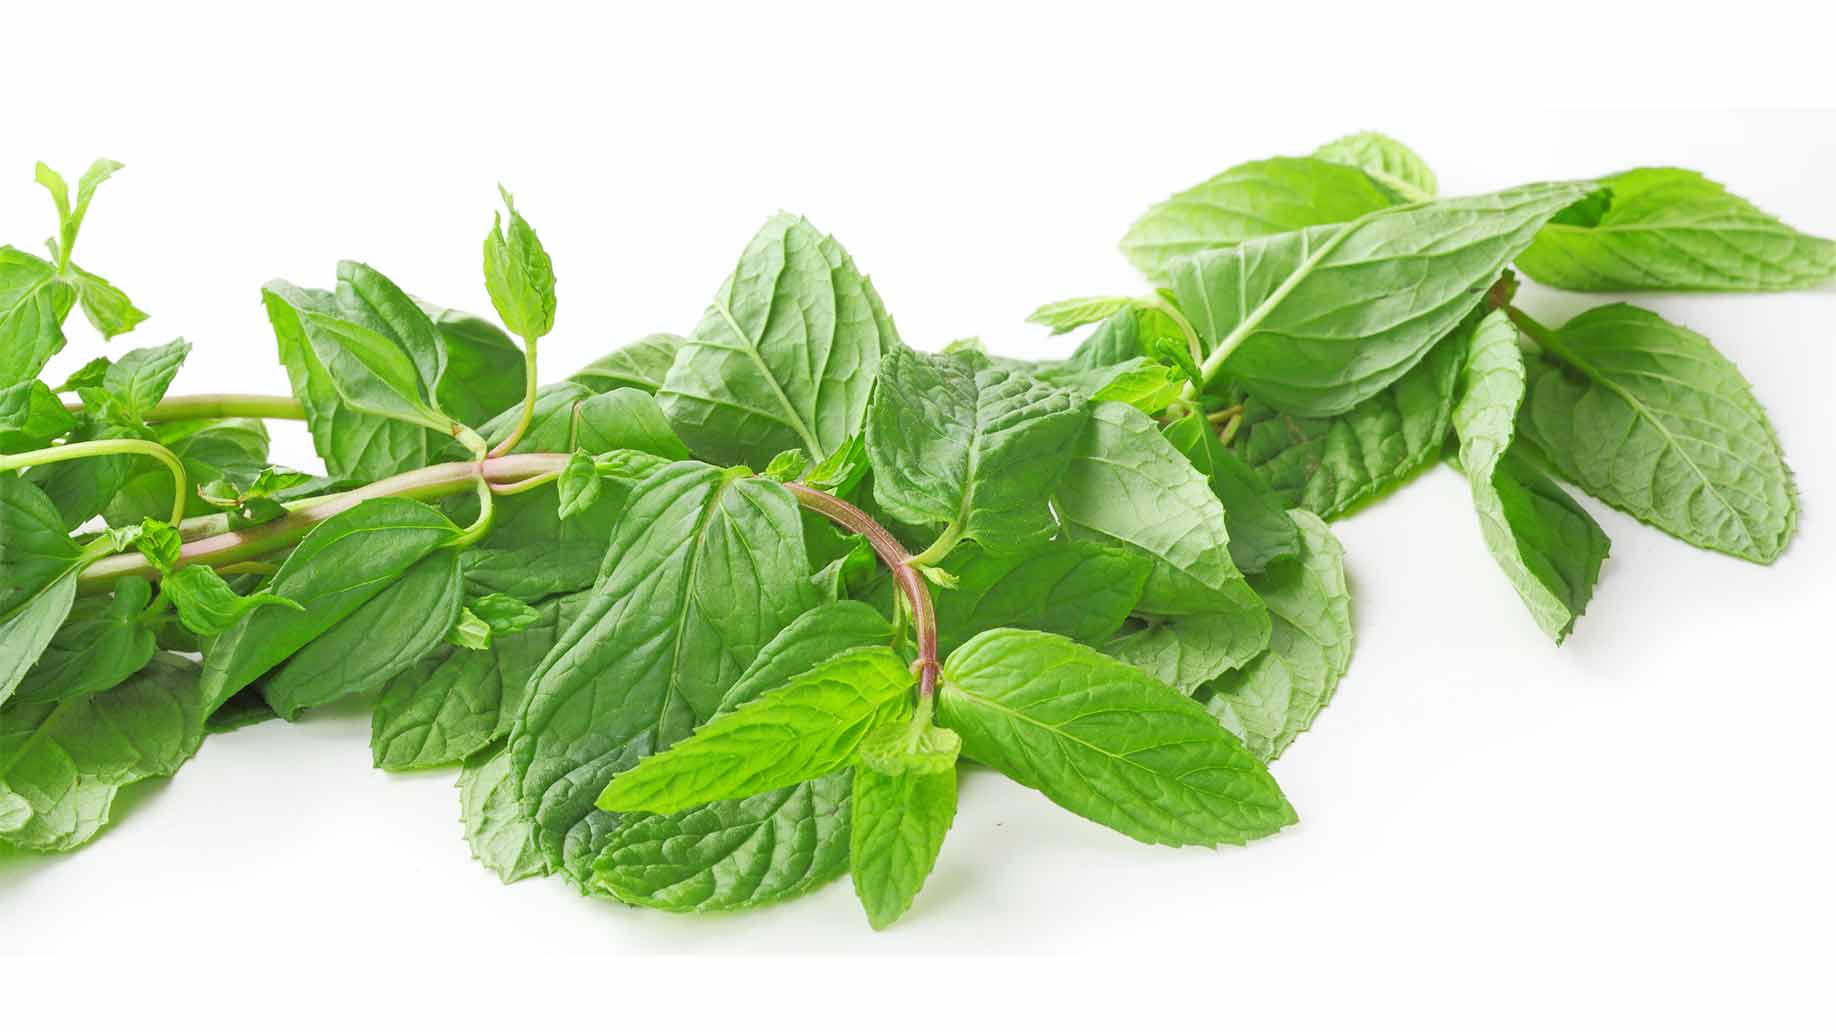 oregano herb fresh green leaves